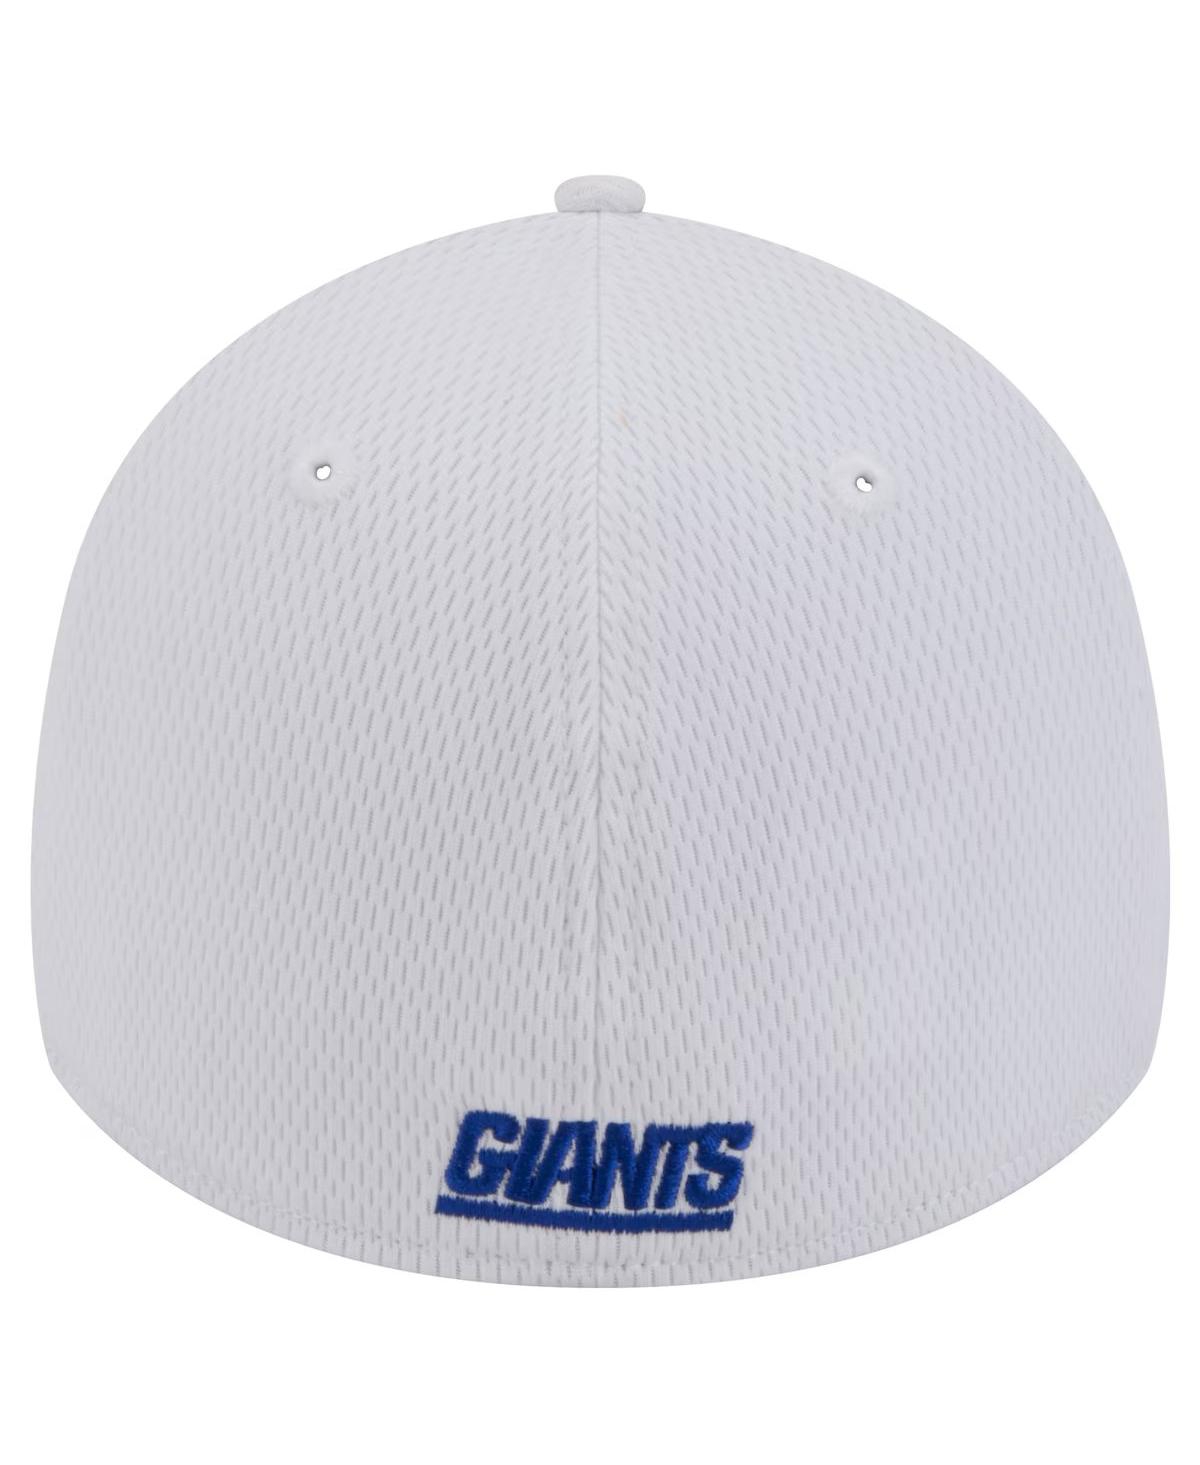 Shop New Era Men's White New York Giants Active 39thirty Flex Hat